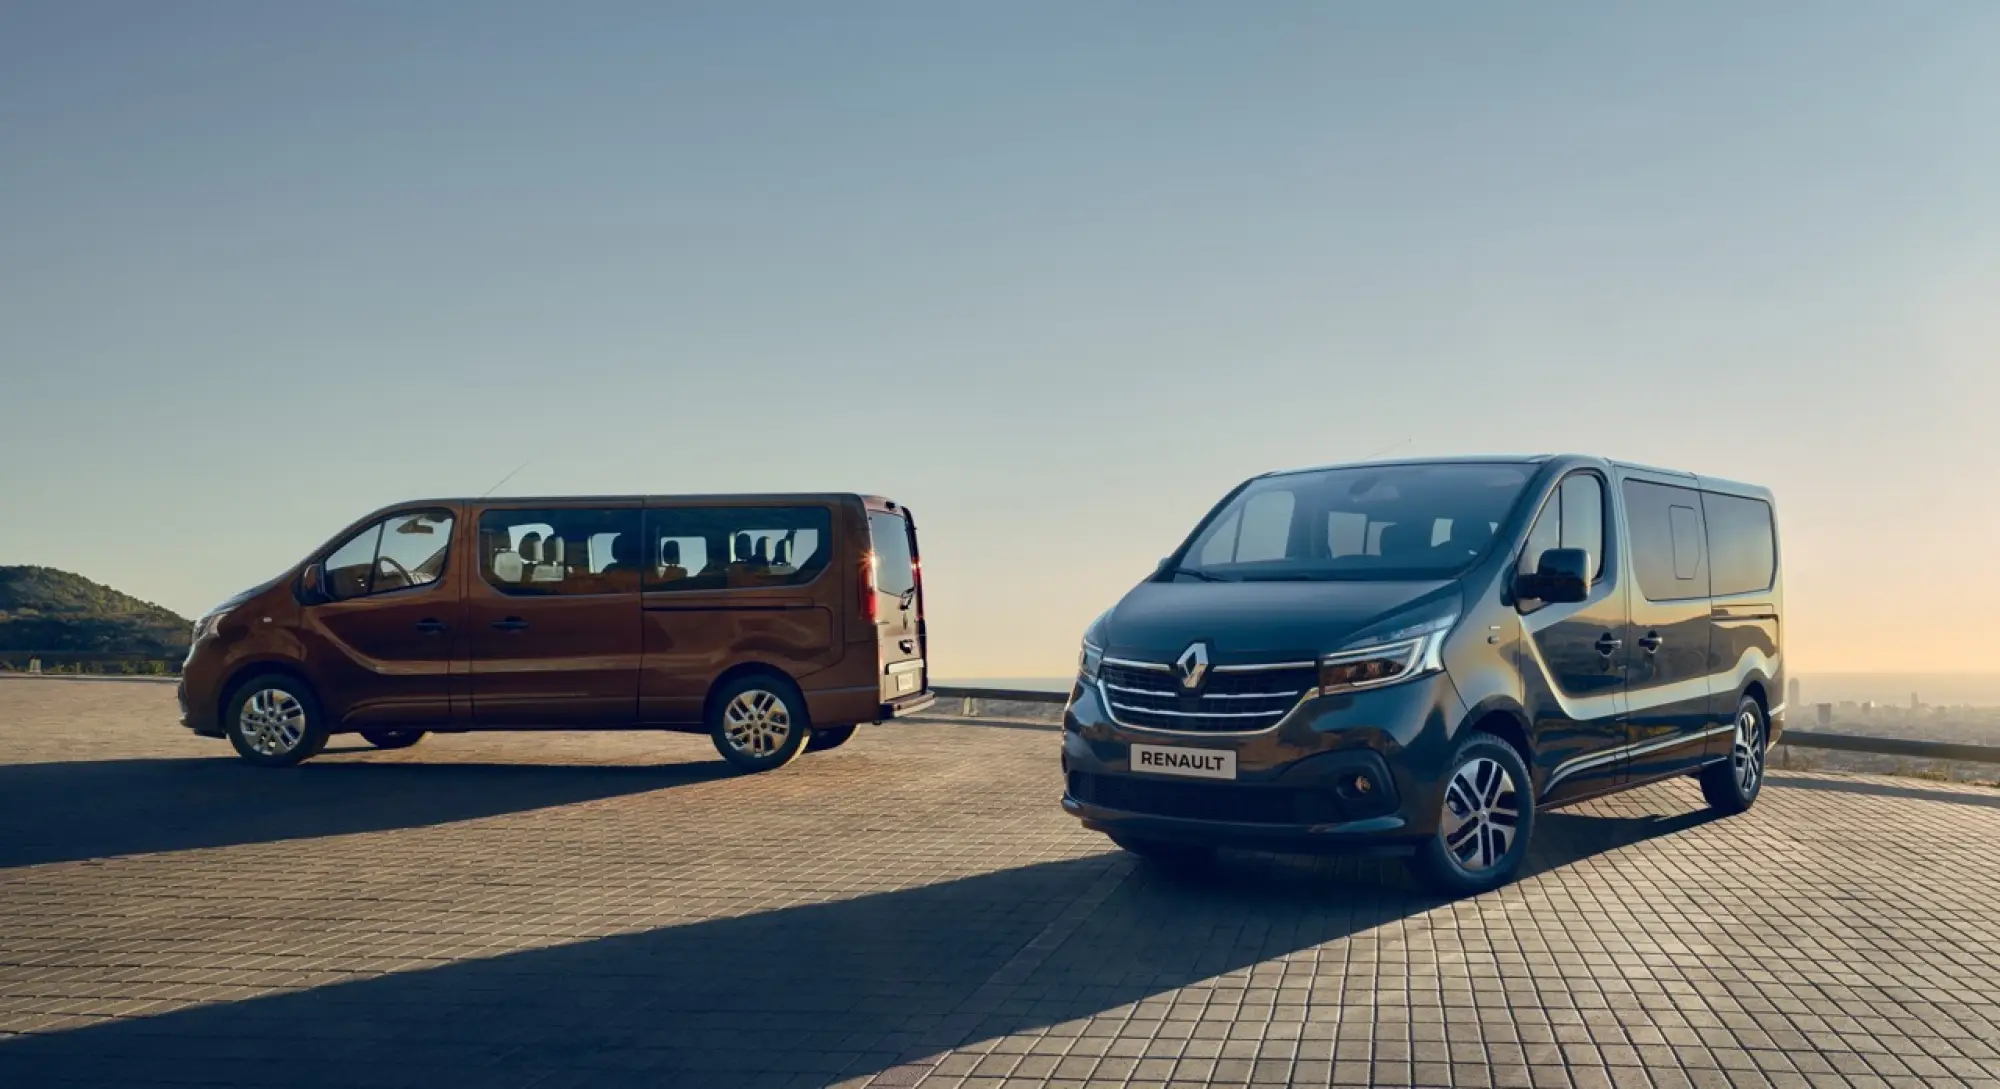 Renault veicoli commerciali - Aprile 2019 - 13